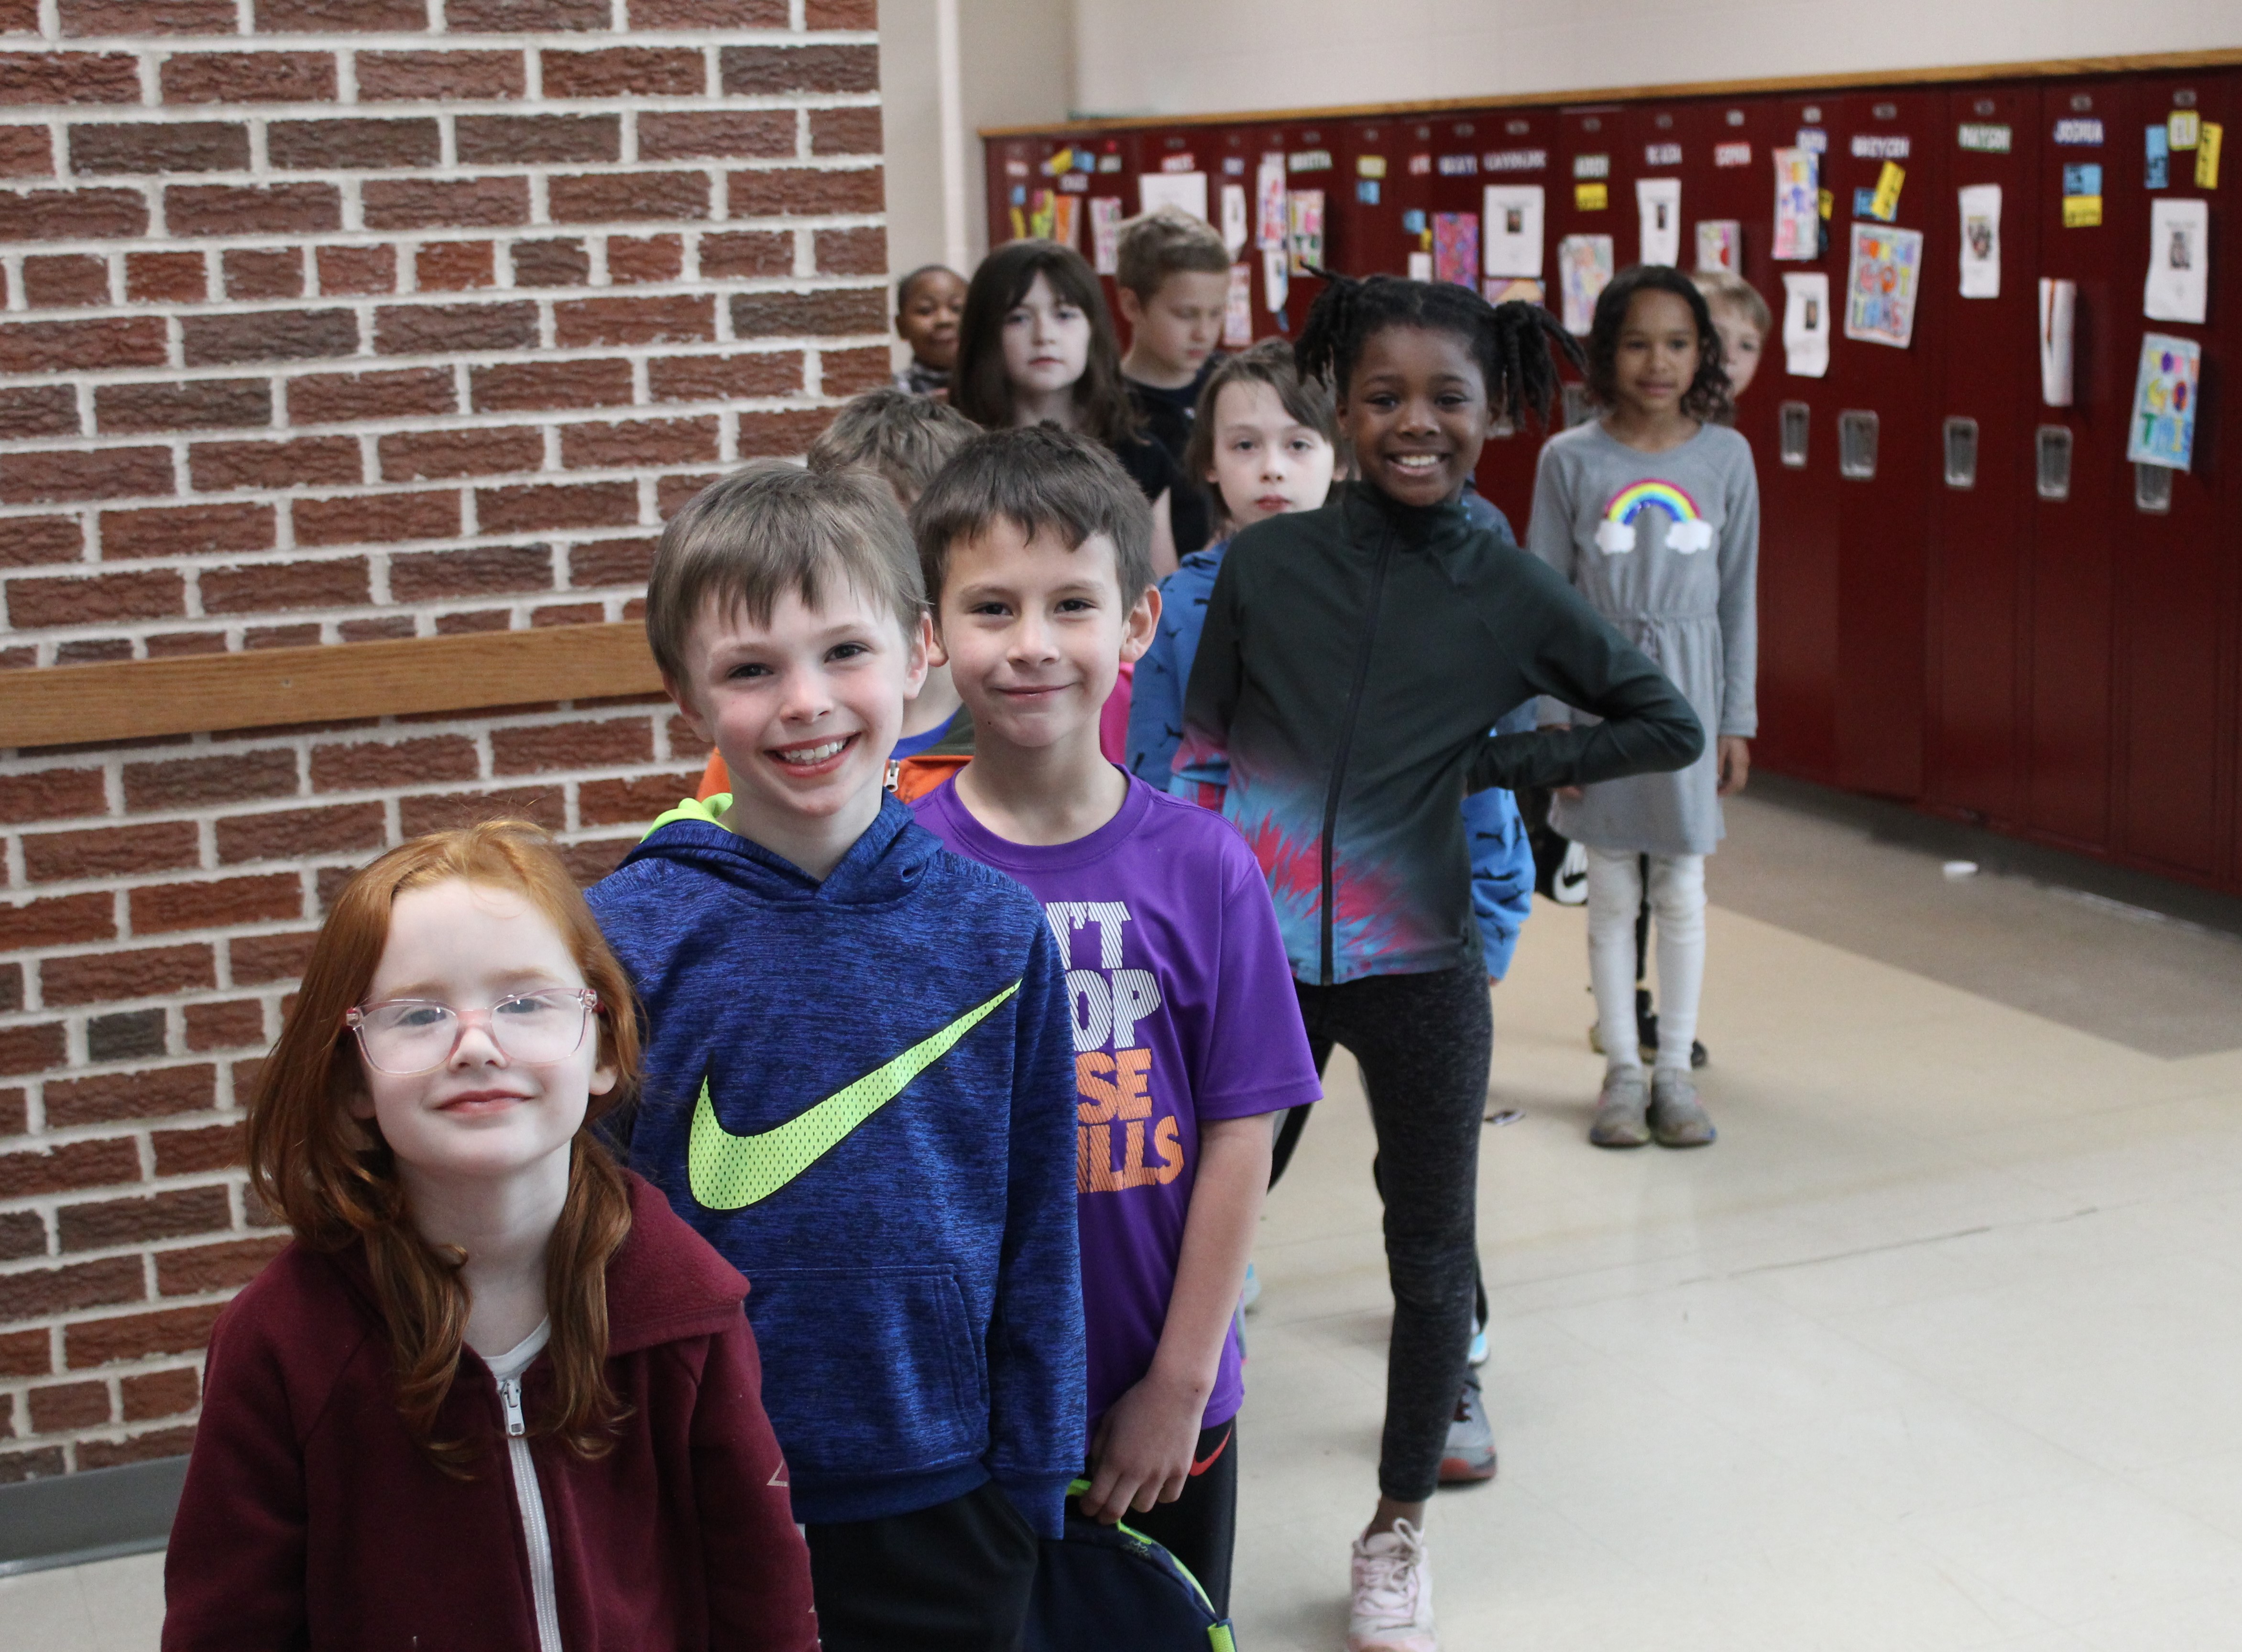 Kids in line at Elementary school